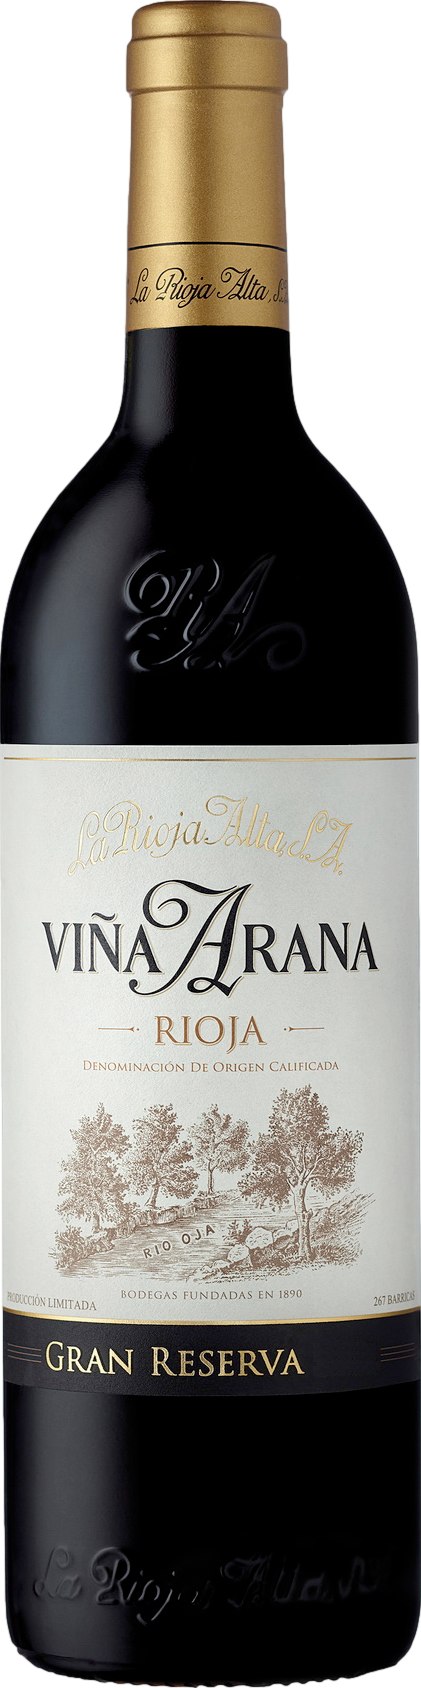 2016/46 günstig Kaufen-La Rioja Alta Gran Reserva Vina Arana 2016. La Rioja Alta Gran Reserva Vina Arana 2016 . 